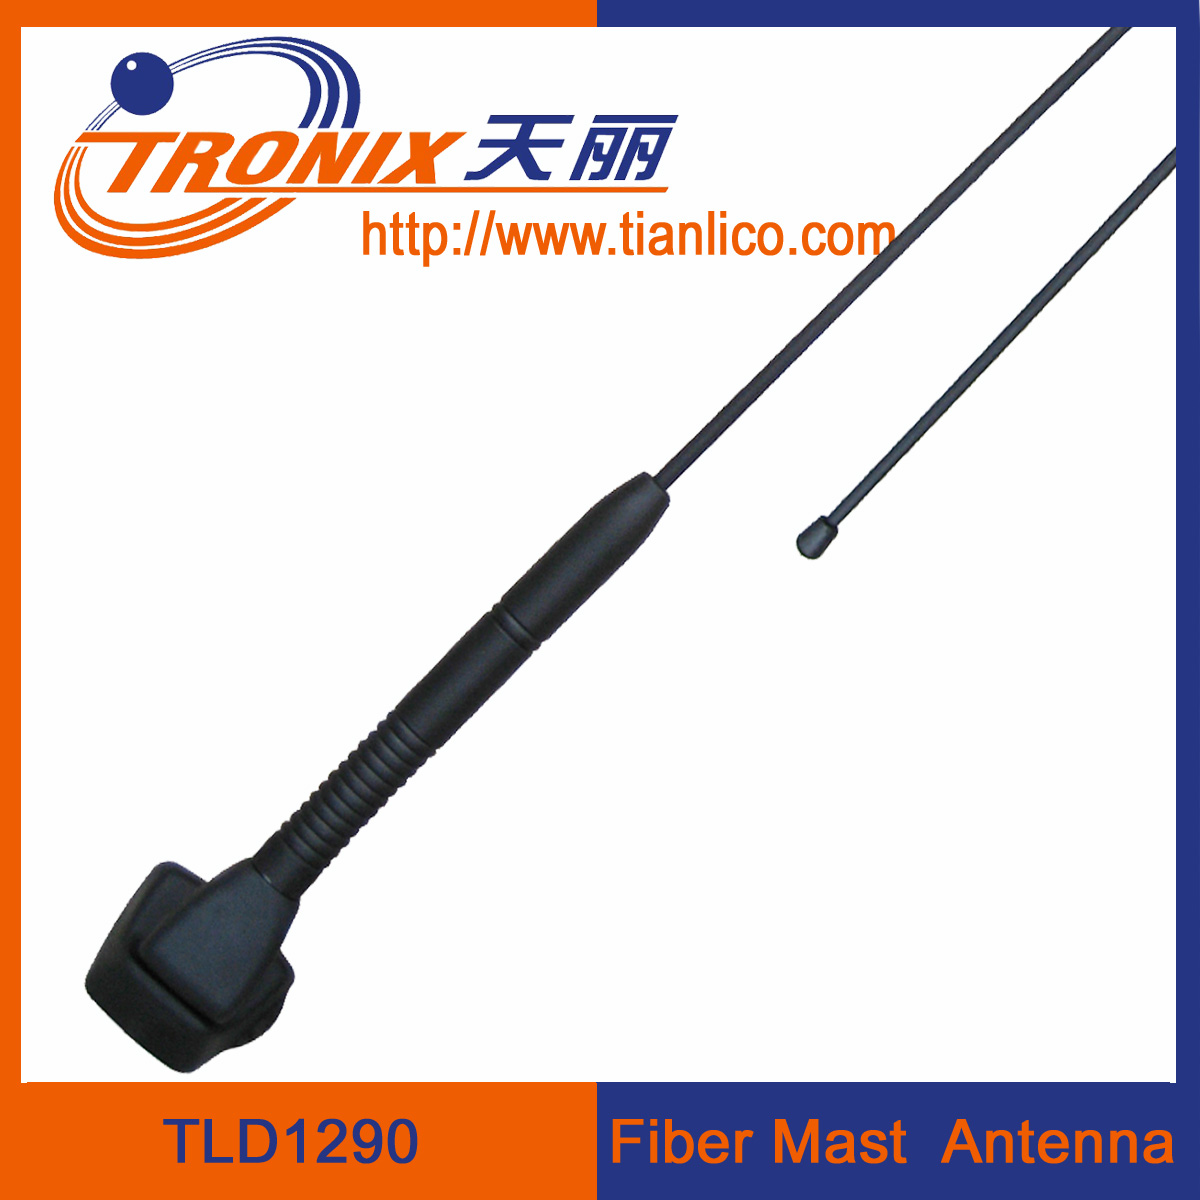 Cheap 1 section fiber mast car antenna/ fiberglass mast car antenna/ active radio antenna TLD1290 for sale